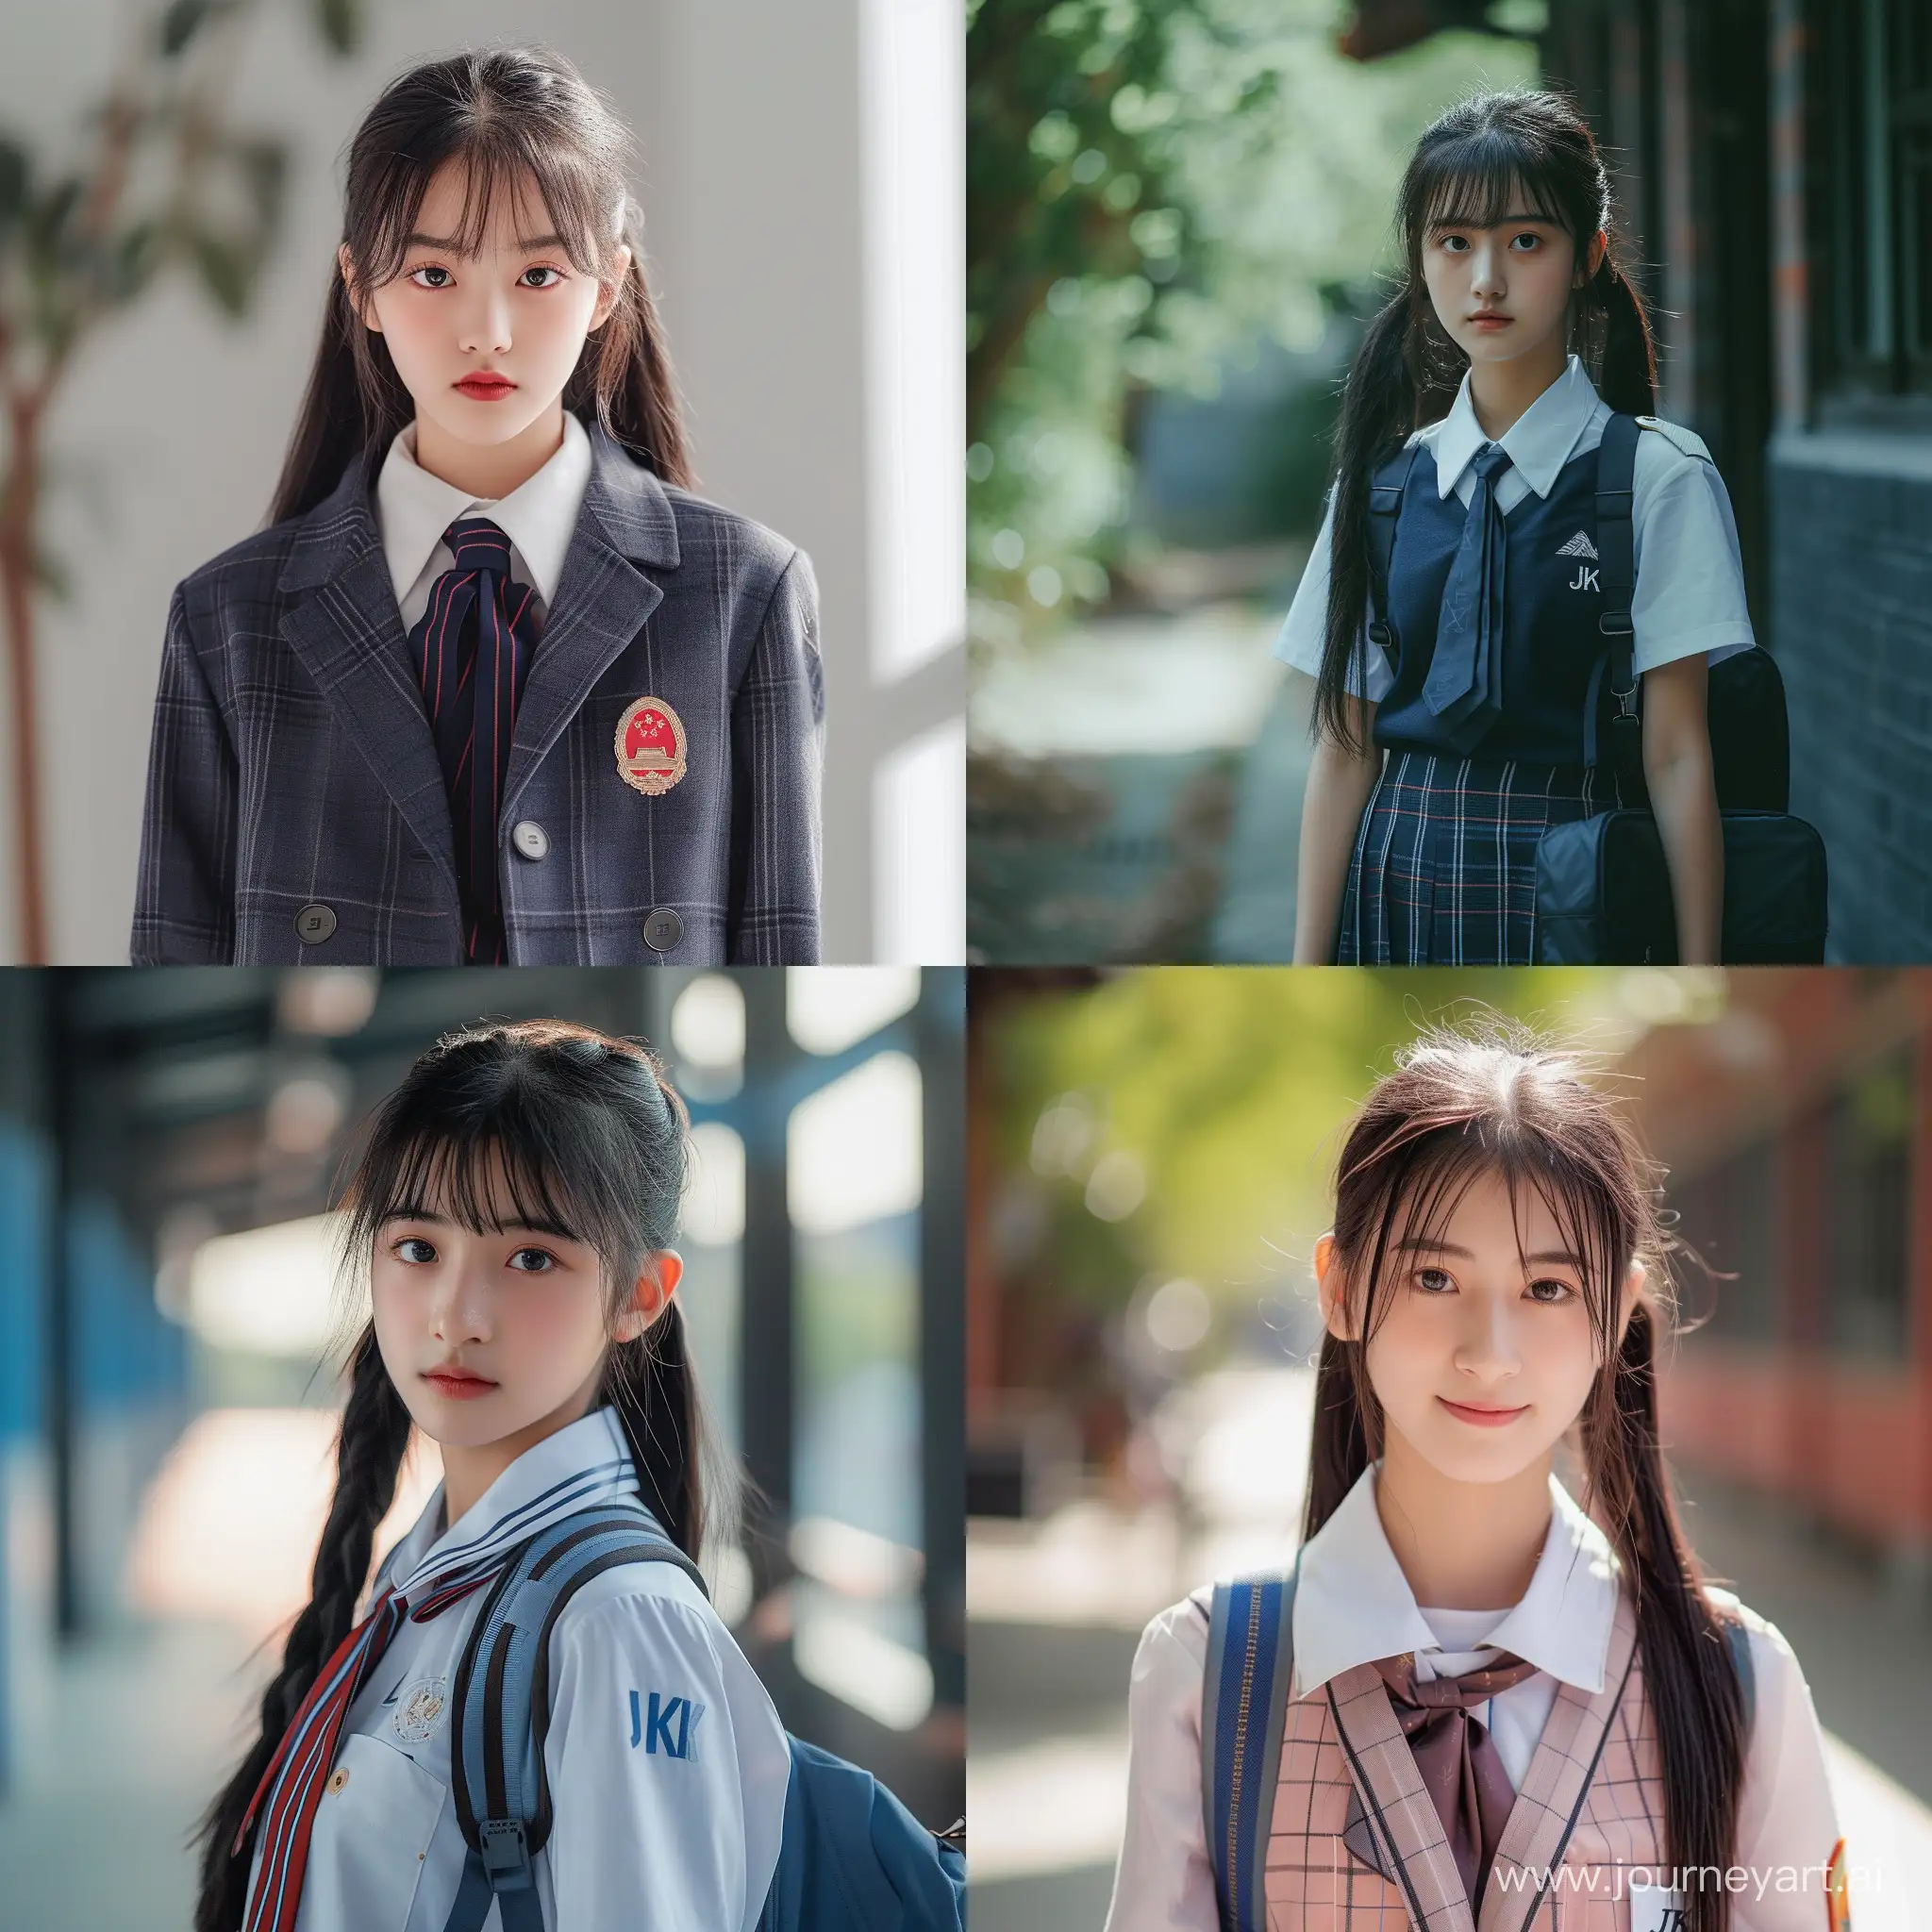 Charming-Chinese-High-School-Girl-in-JK-Uniform